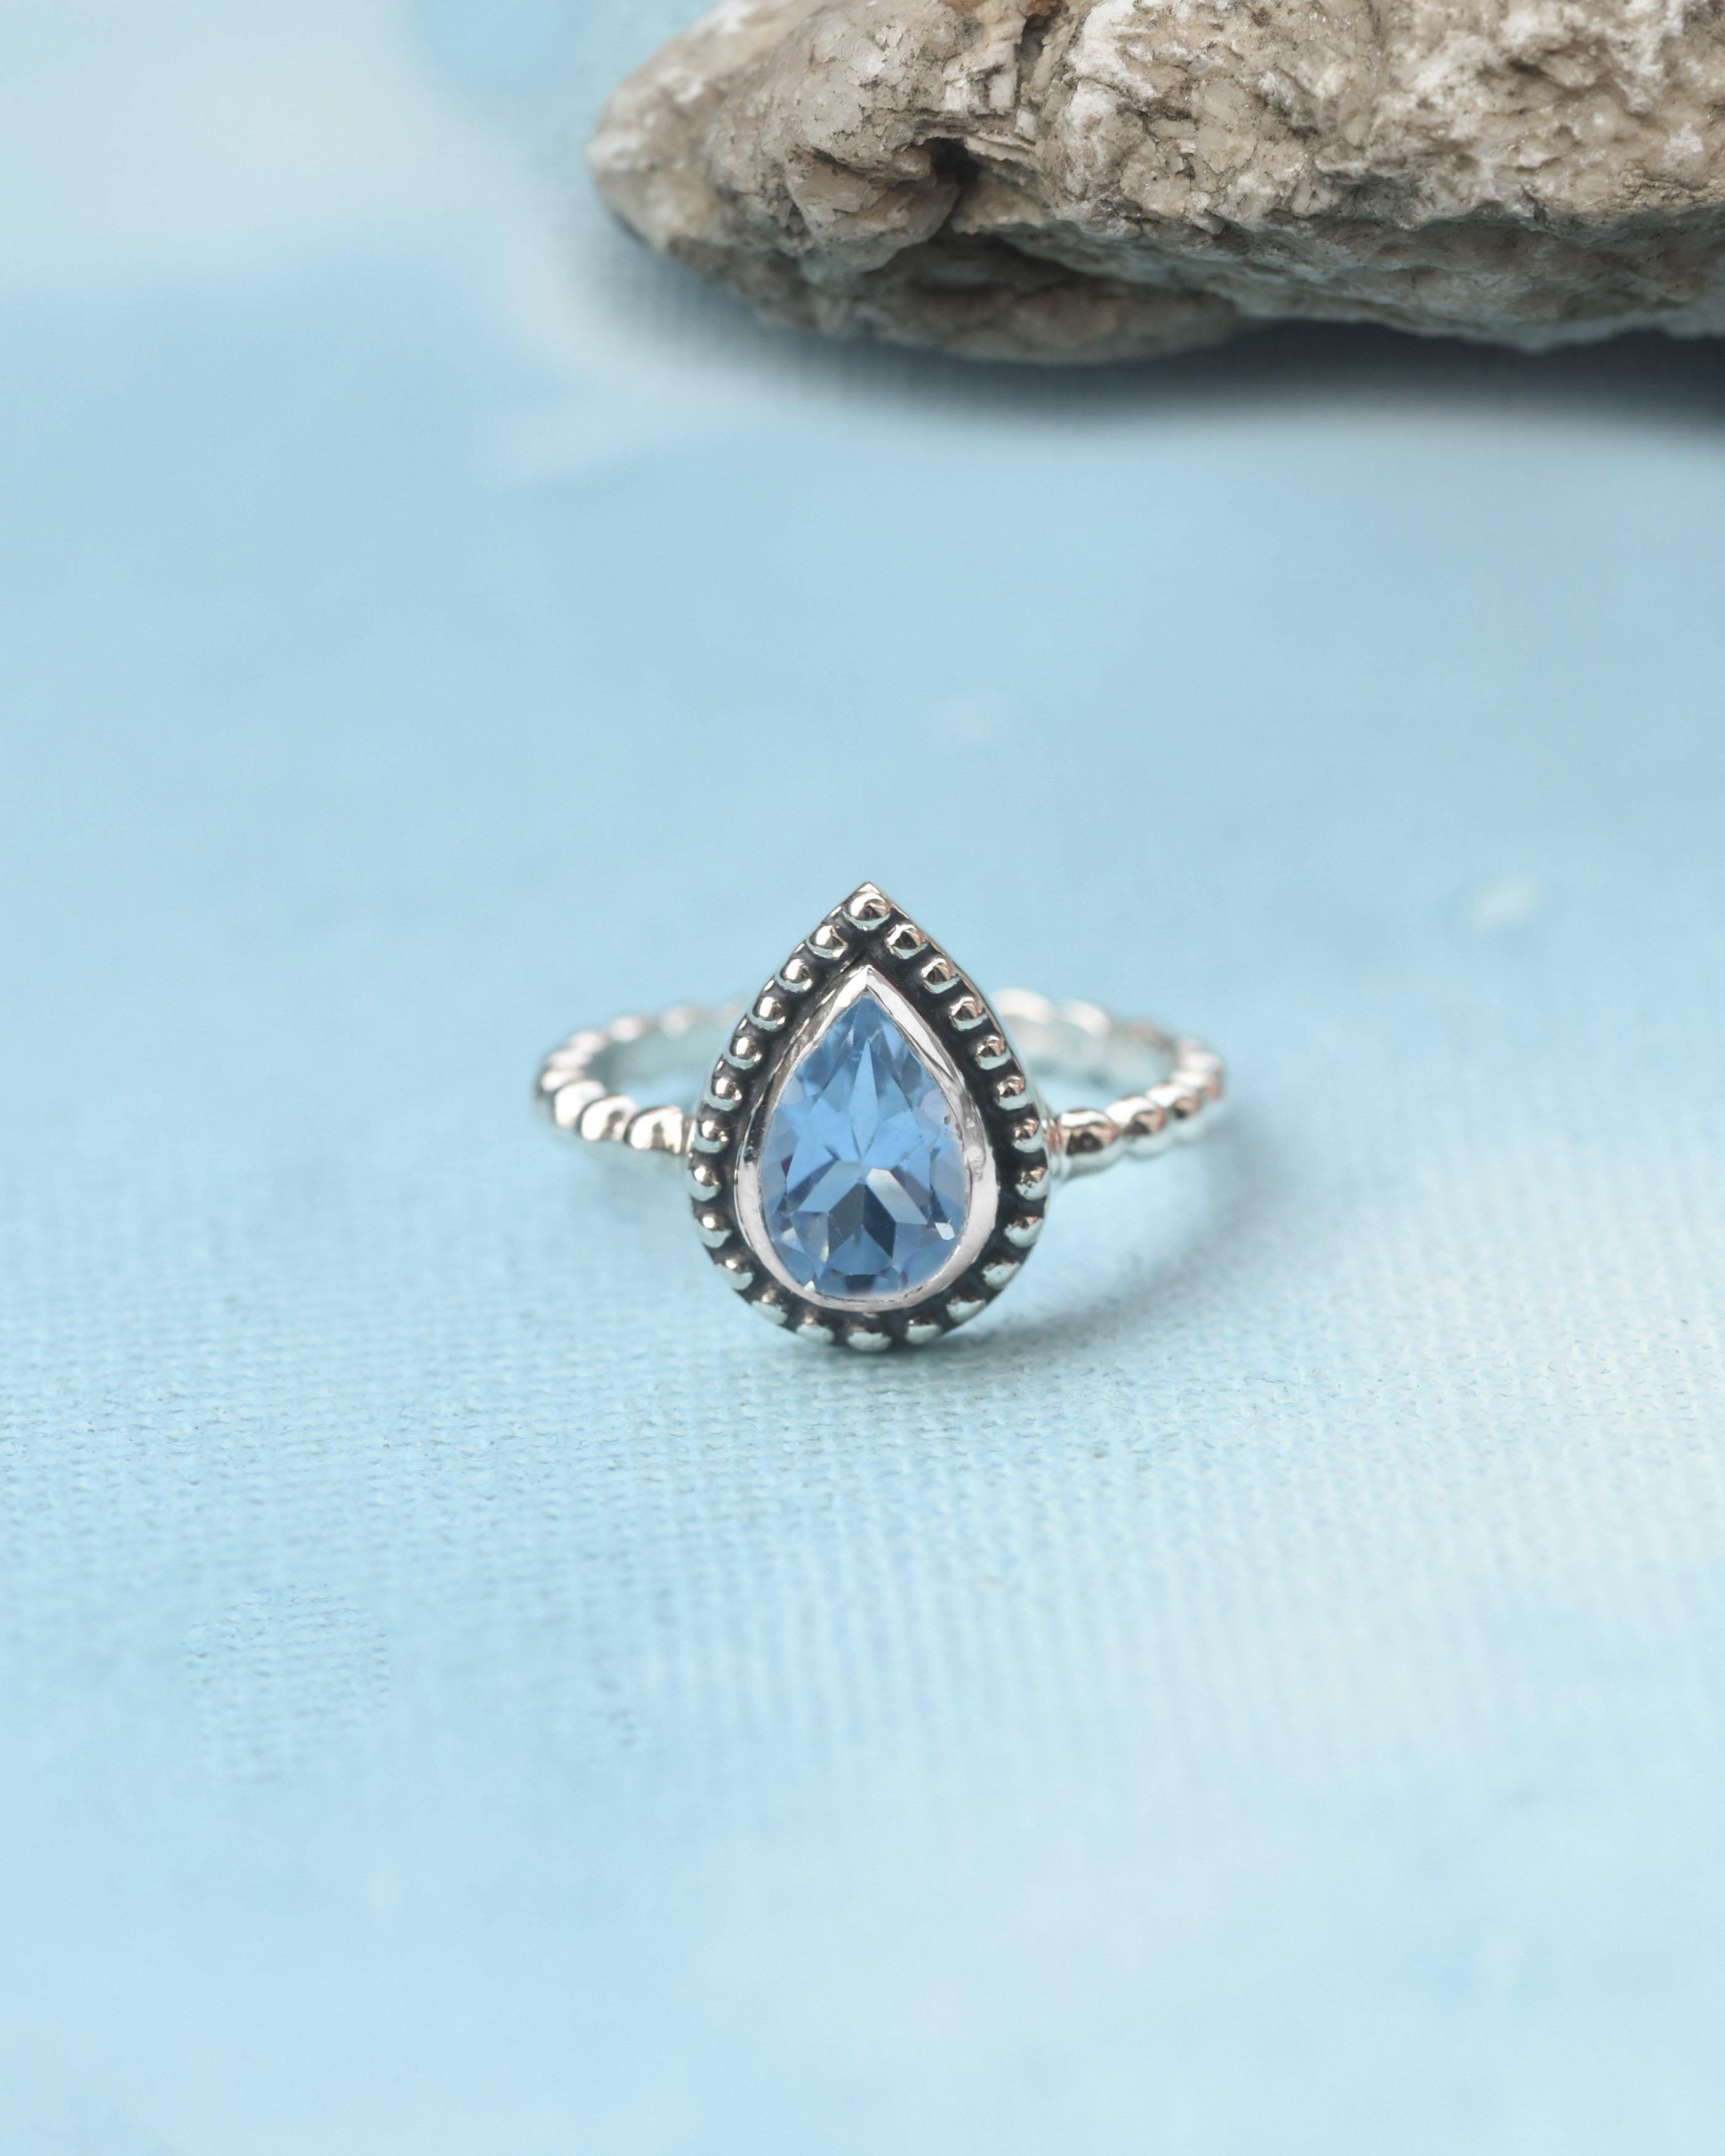 Blue Topaz Solid 925 Sterling Silver Ring Genuine Gemstone Jewelry - YoTreasure